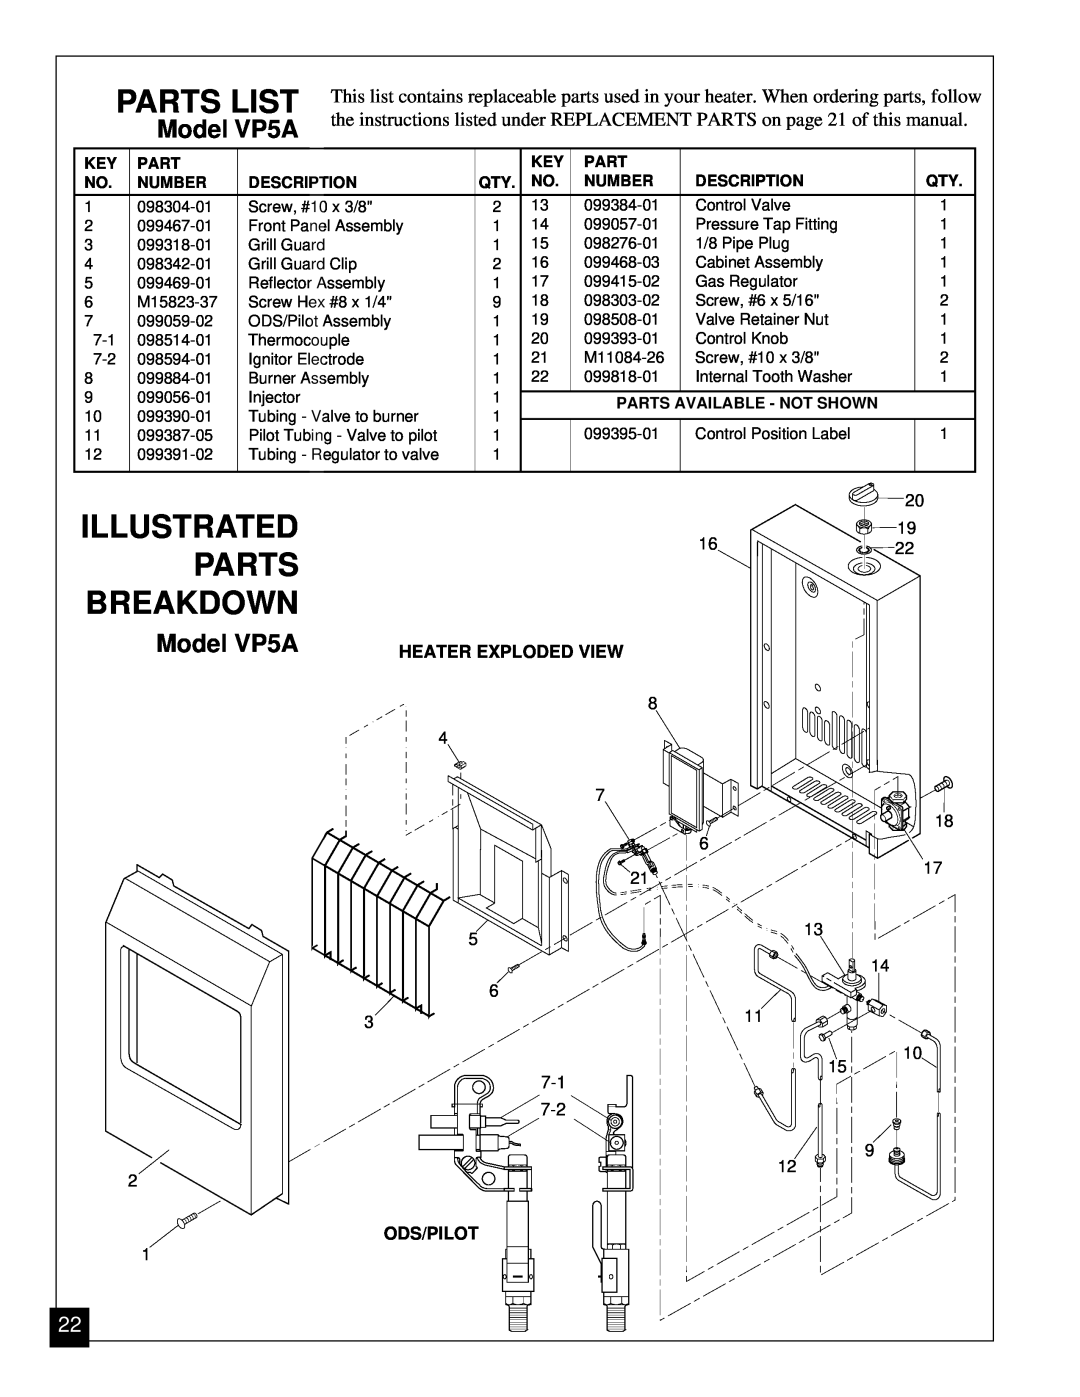 Desa VP11 installation manual Parts List, Breakdown, Illustrated, Model VP5A 